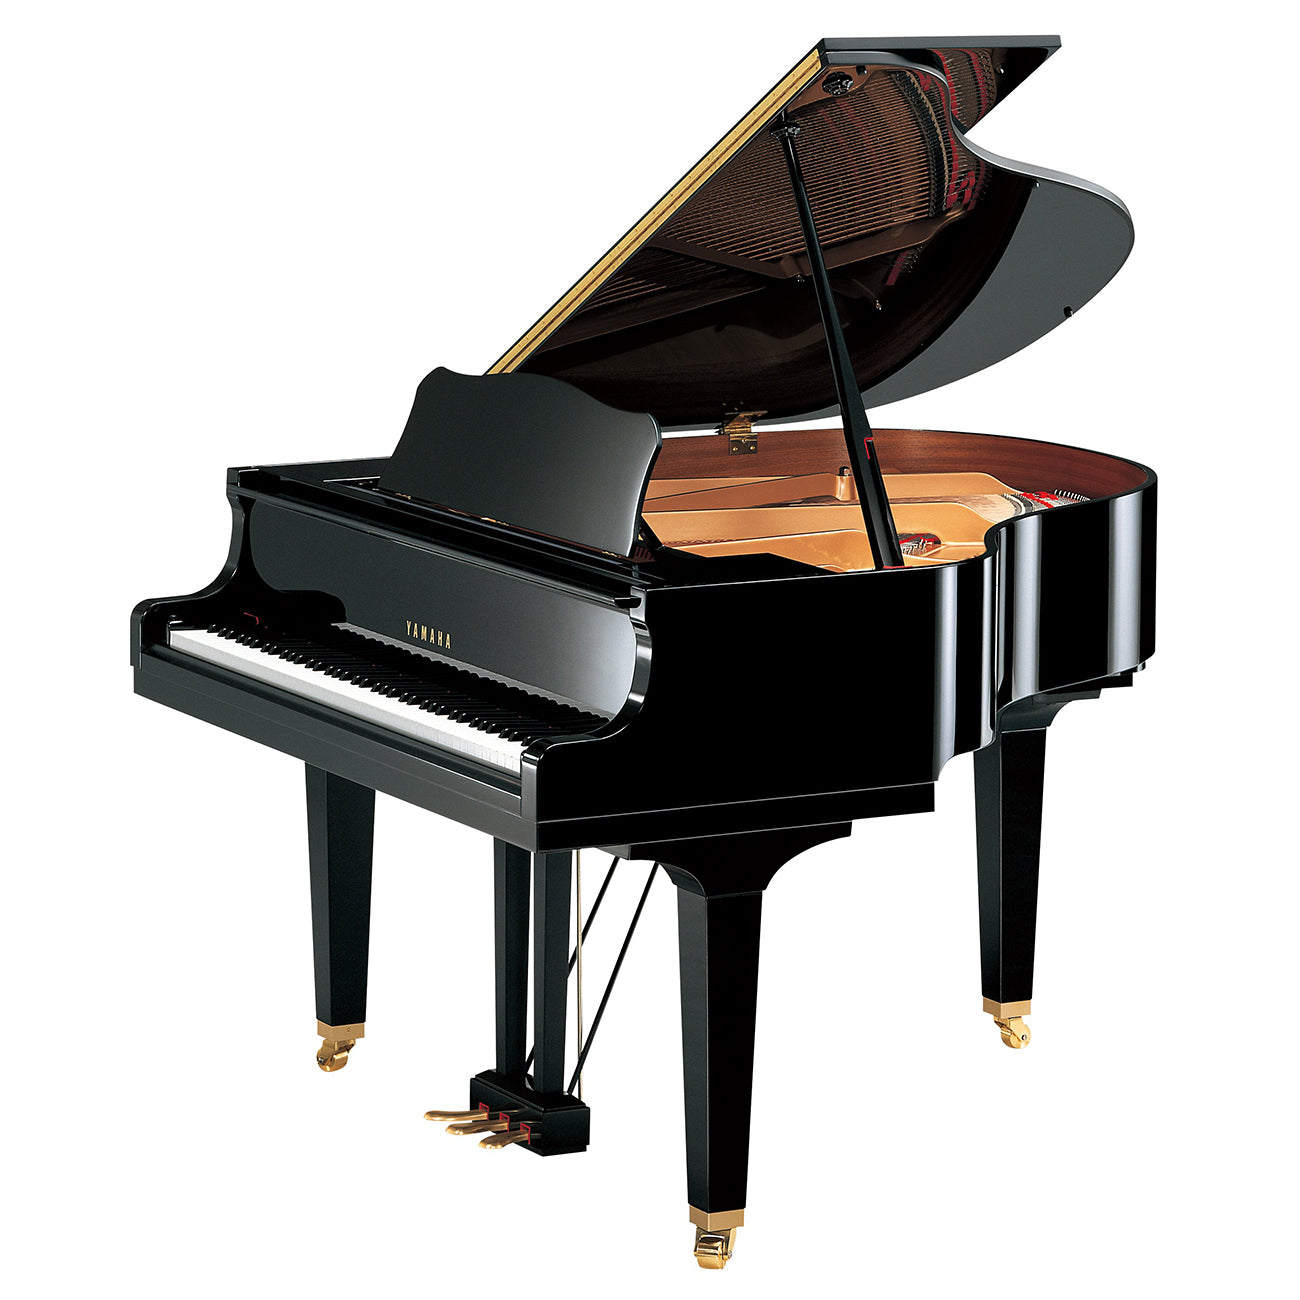 Yamaha grand piano for sale